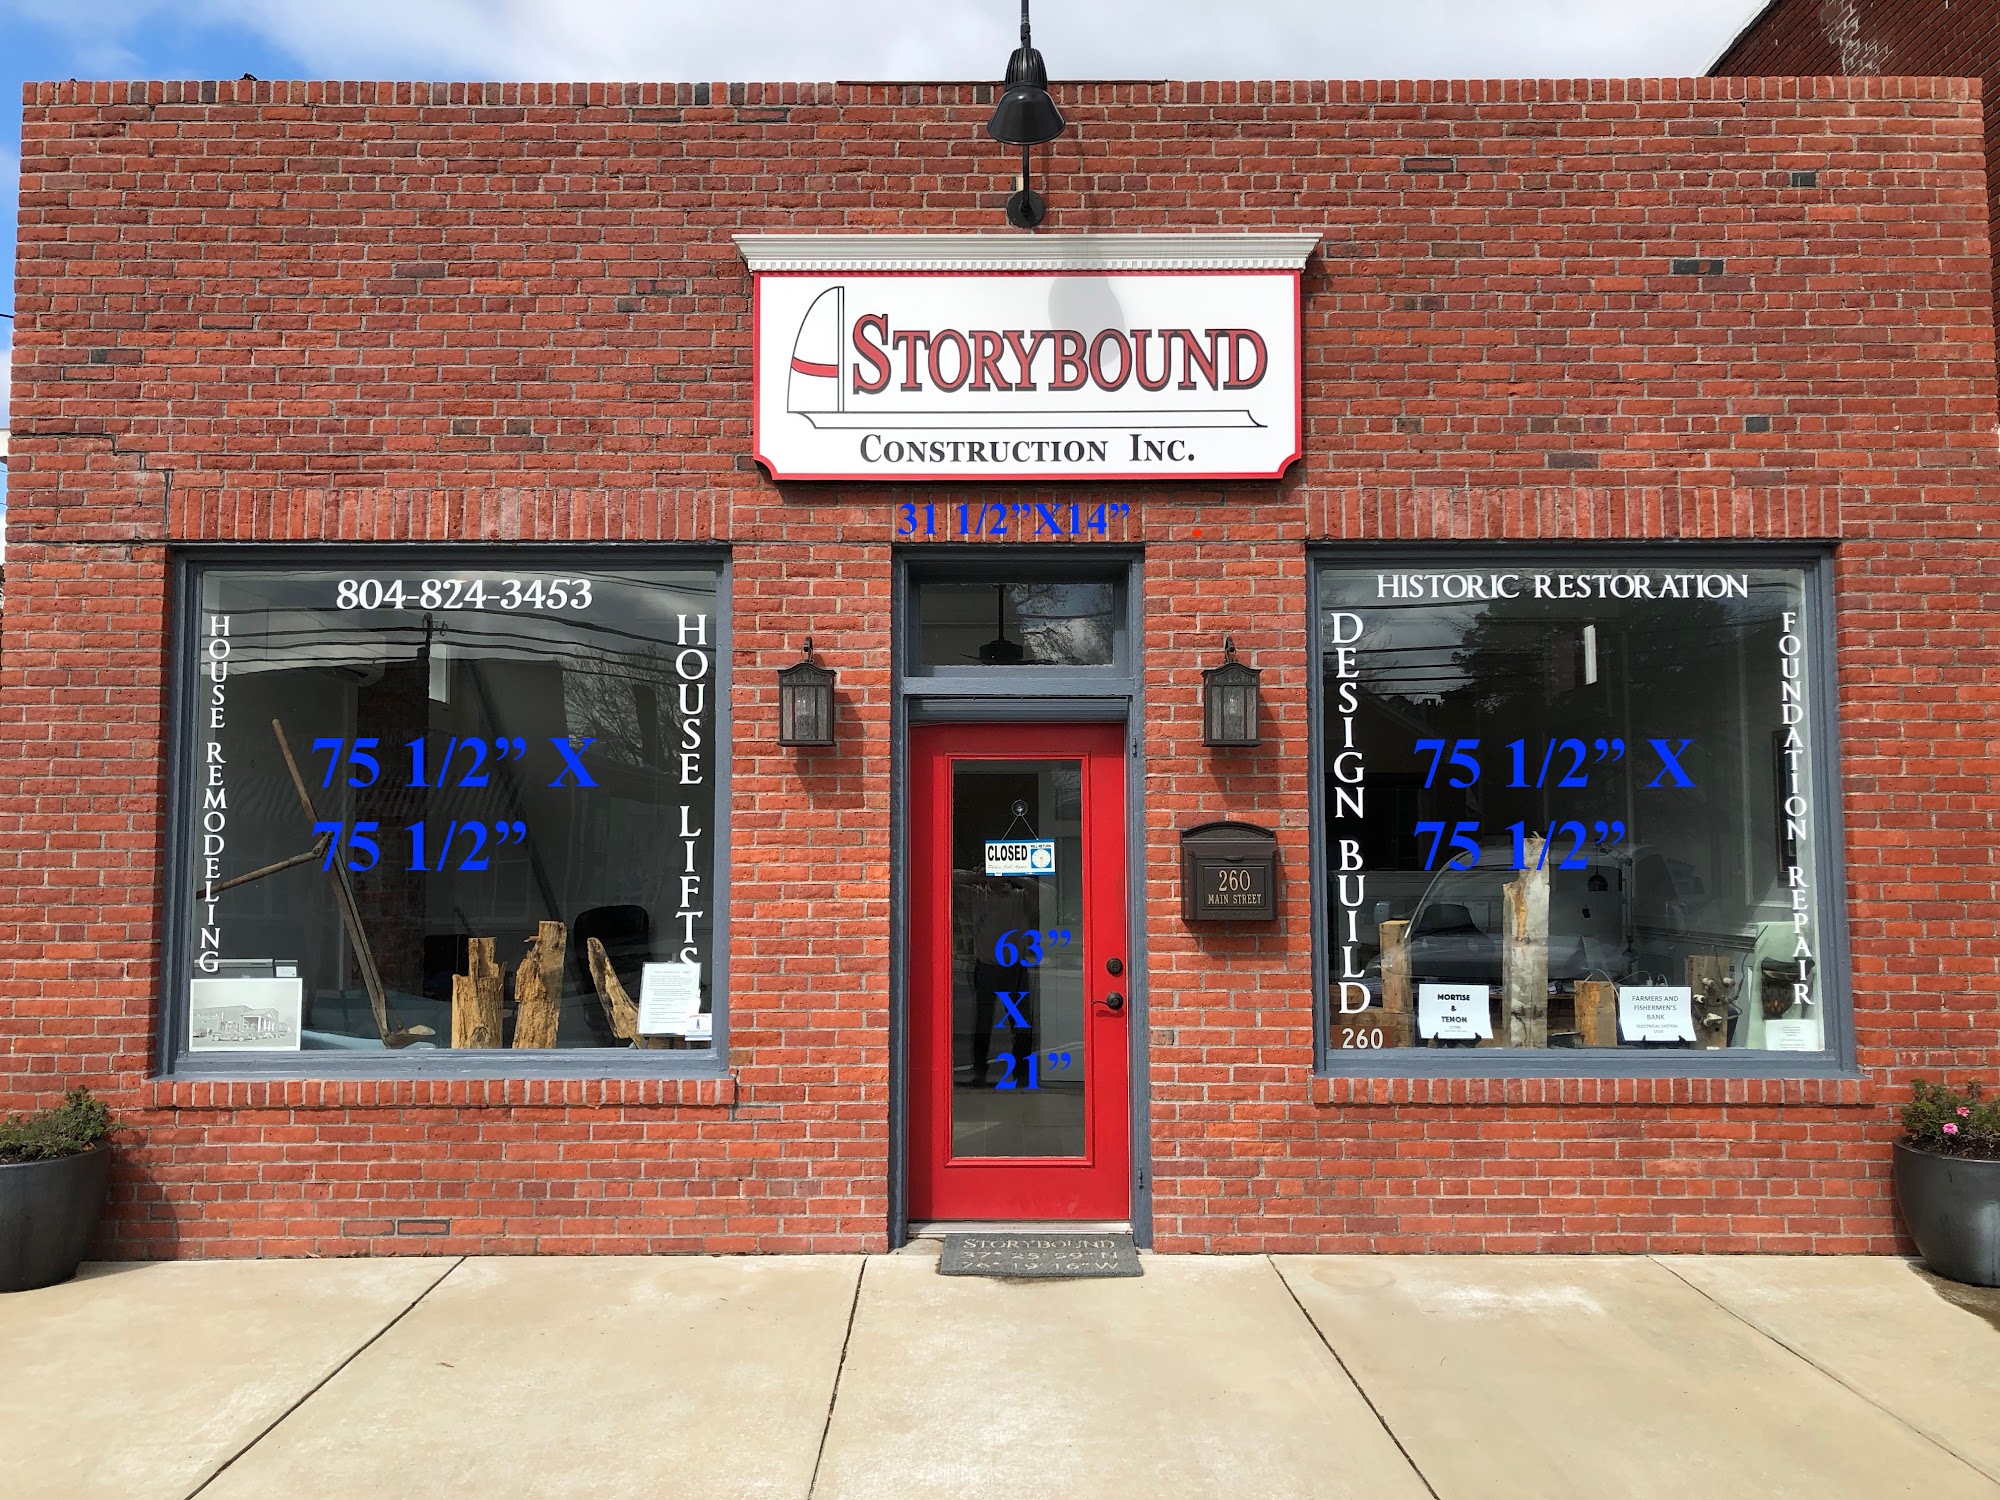 Storybound Construction, Inc. 260 Main St, Mathews Virginia 23109